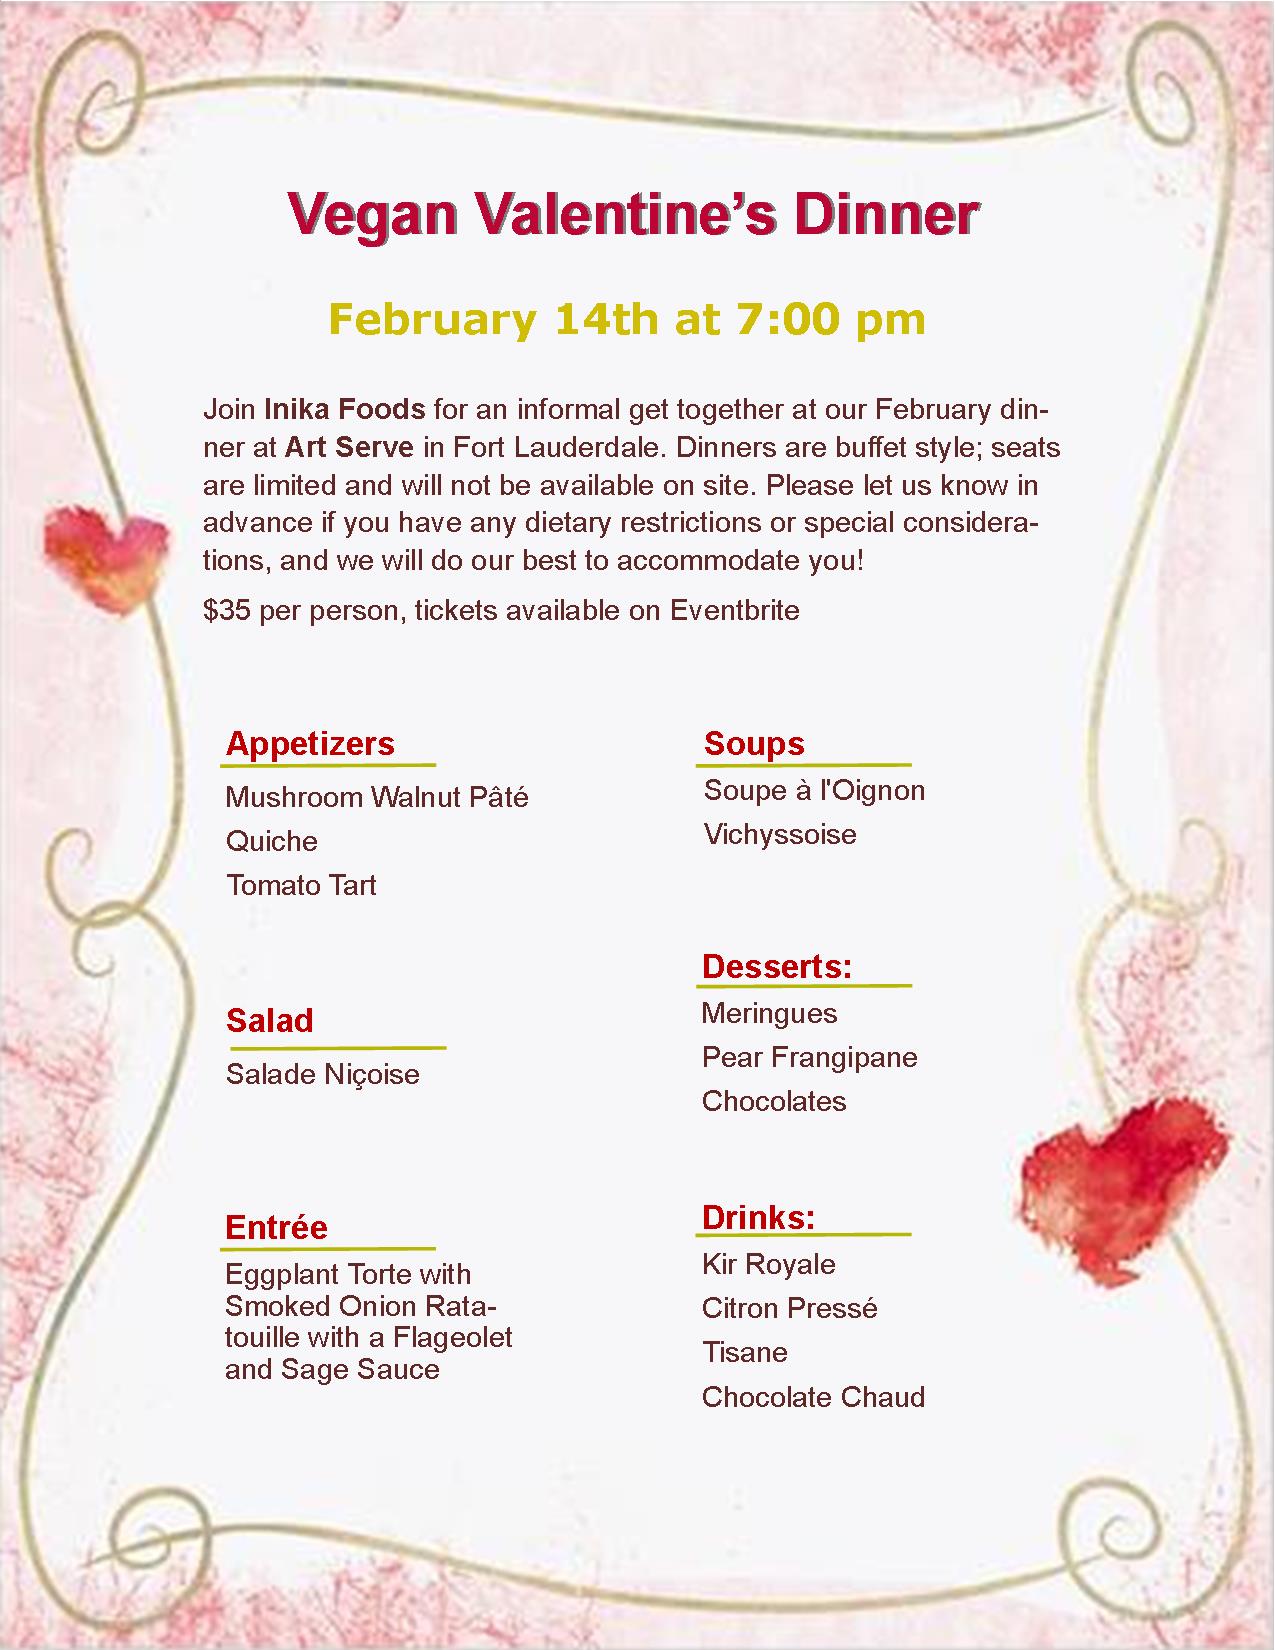 Vegan Valentine's Dinner